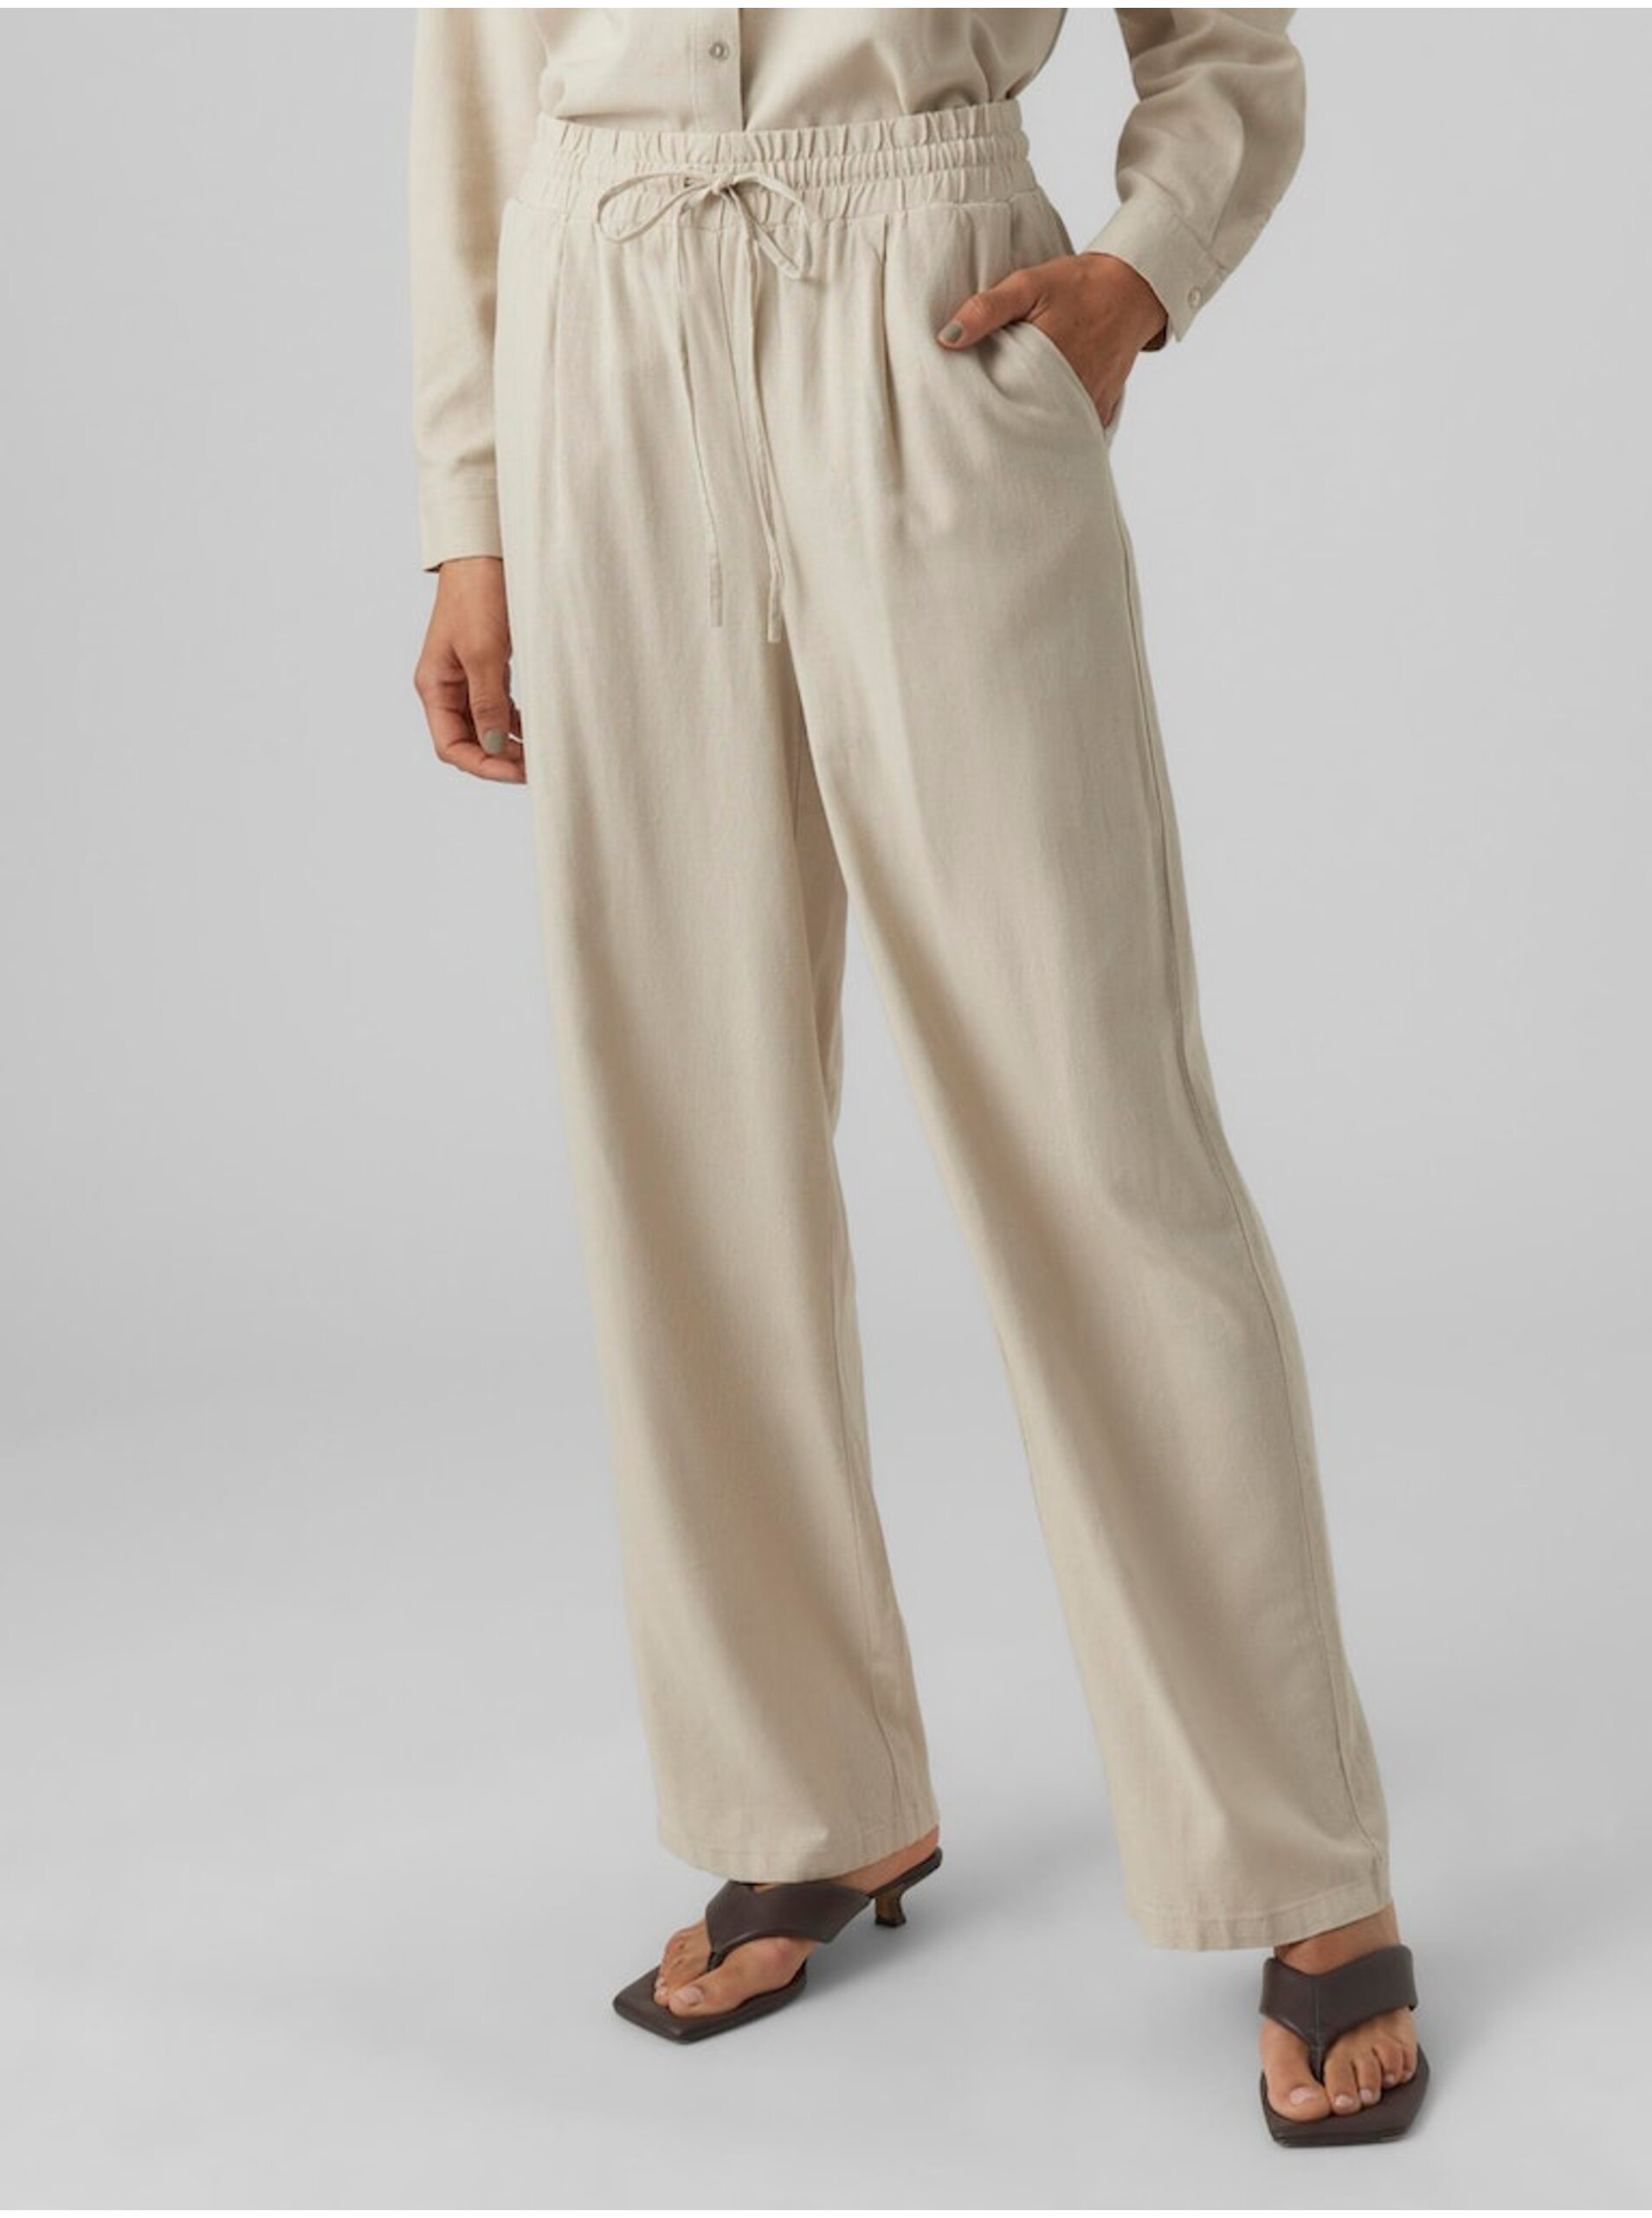 Creamy women's trousers with linen blend Vero Moda Jesmilo - Women